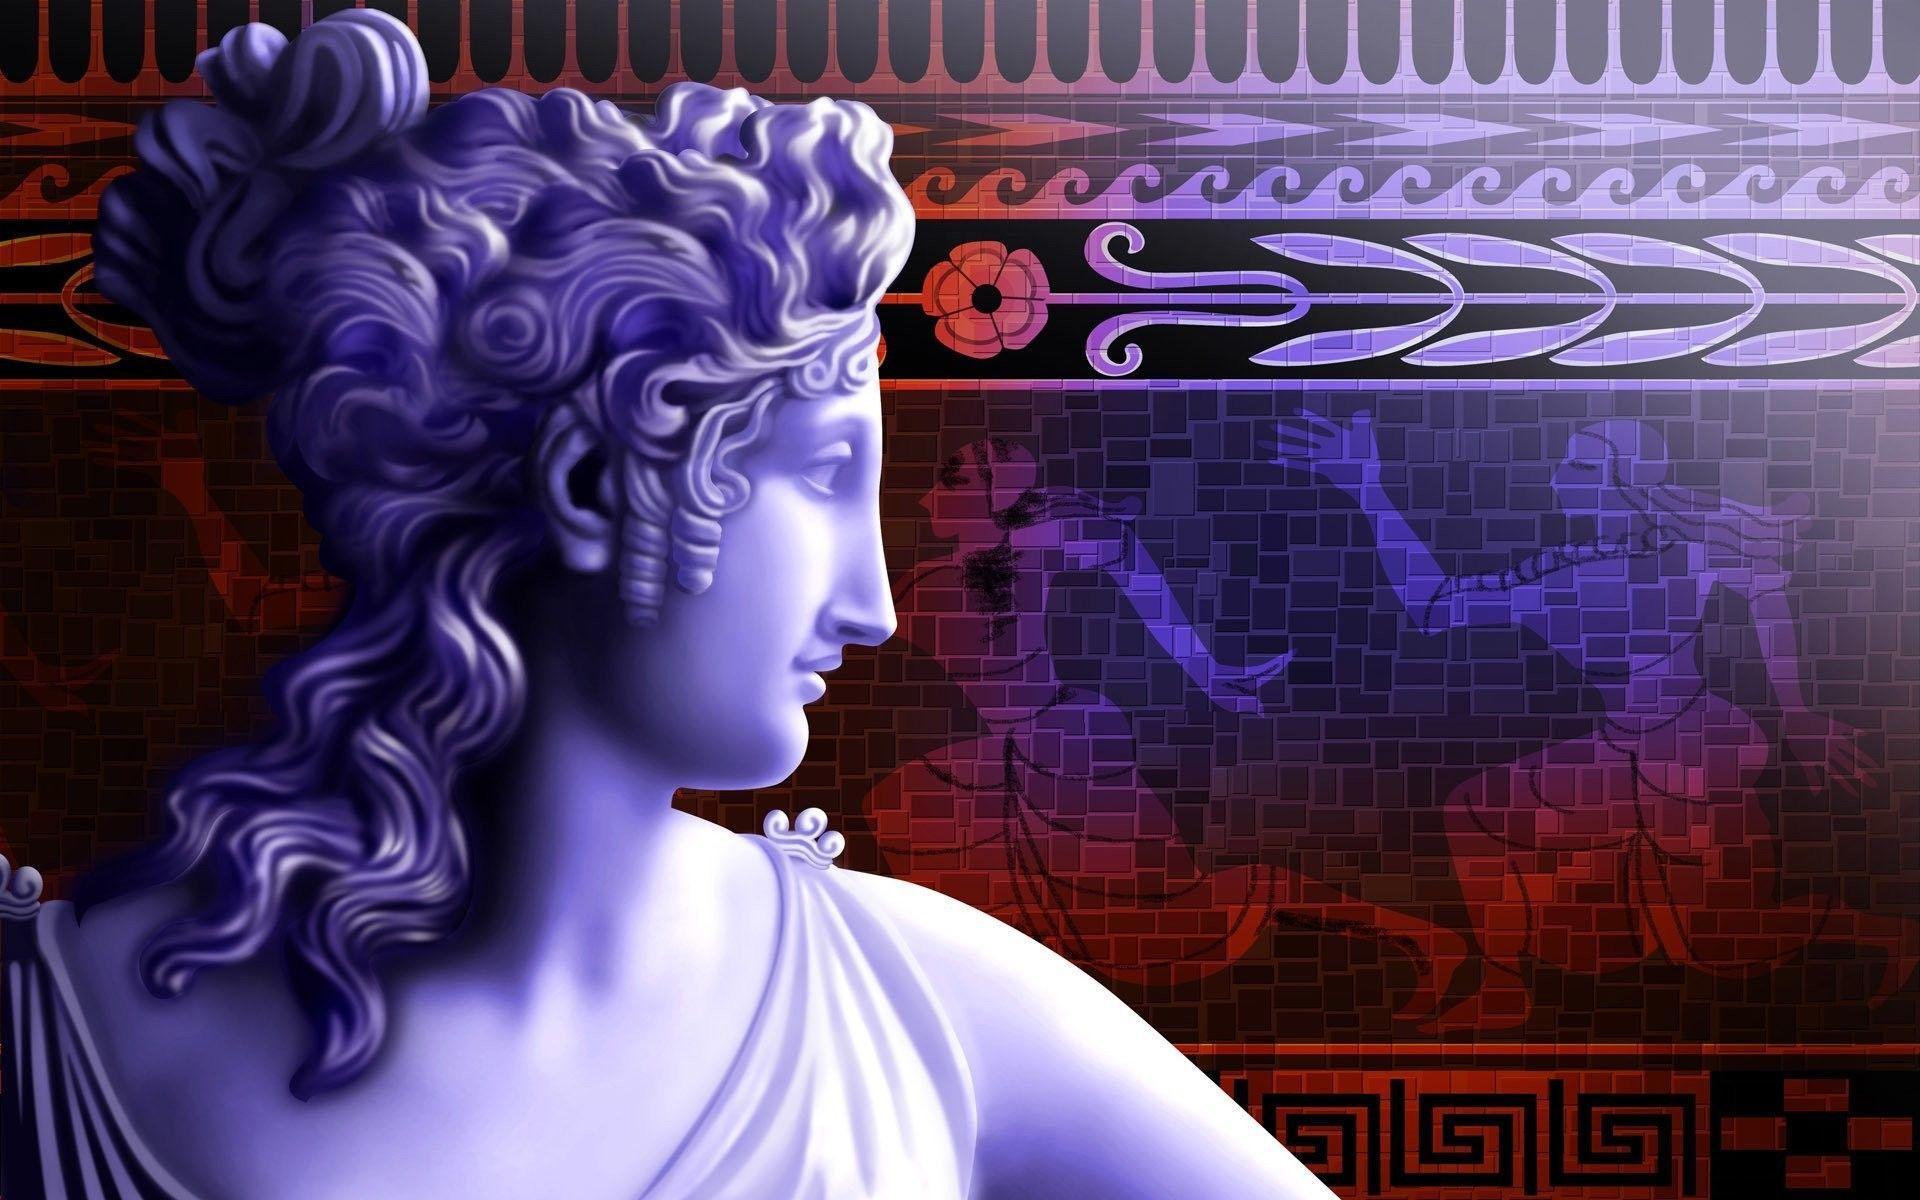 aesthetic greek statue wallpaper by Crystaliz69 on DeviantArt